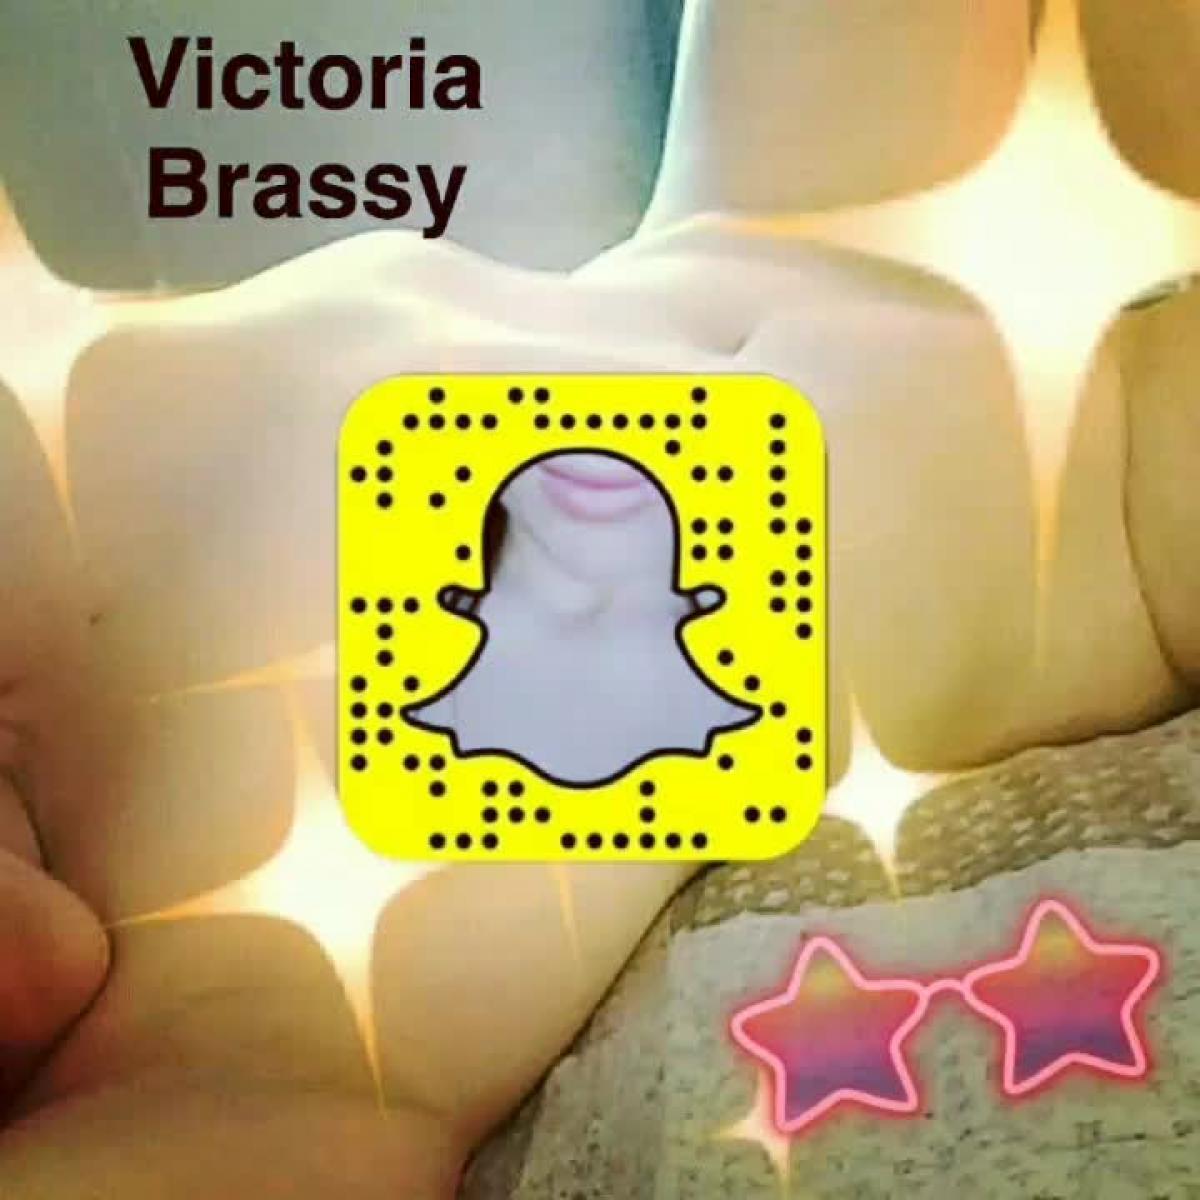 victoria_brassy download cam release [2021/12/18]